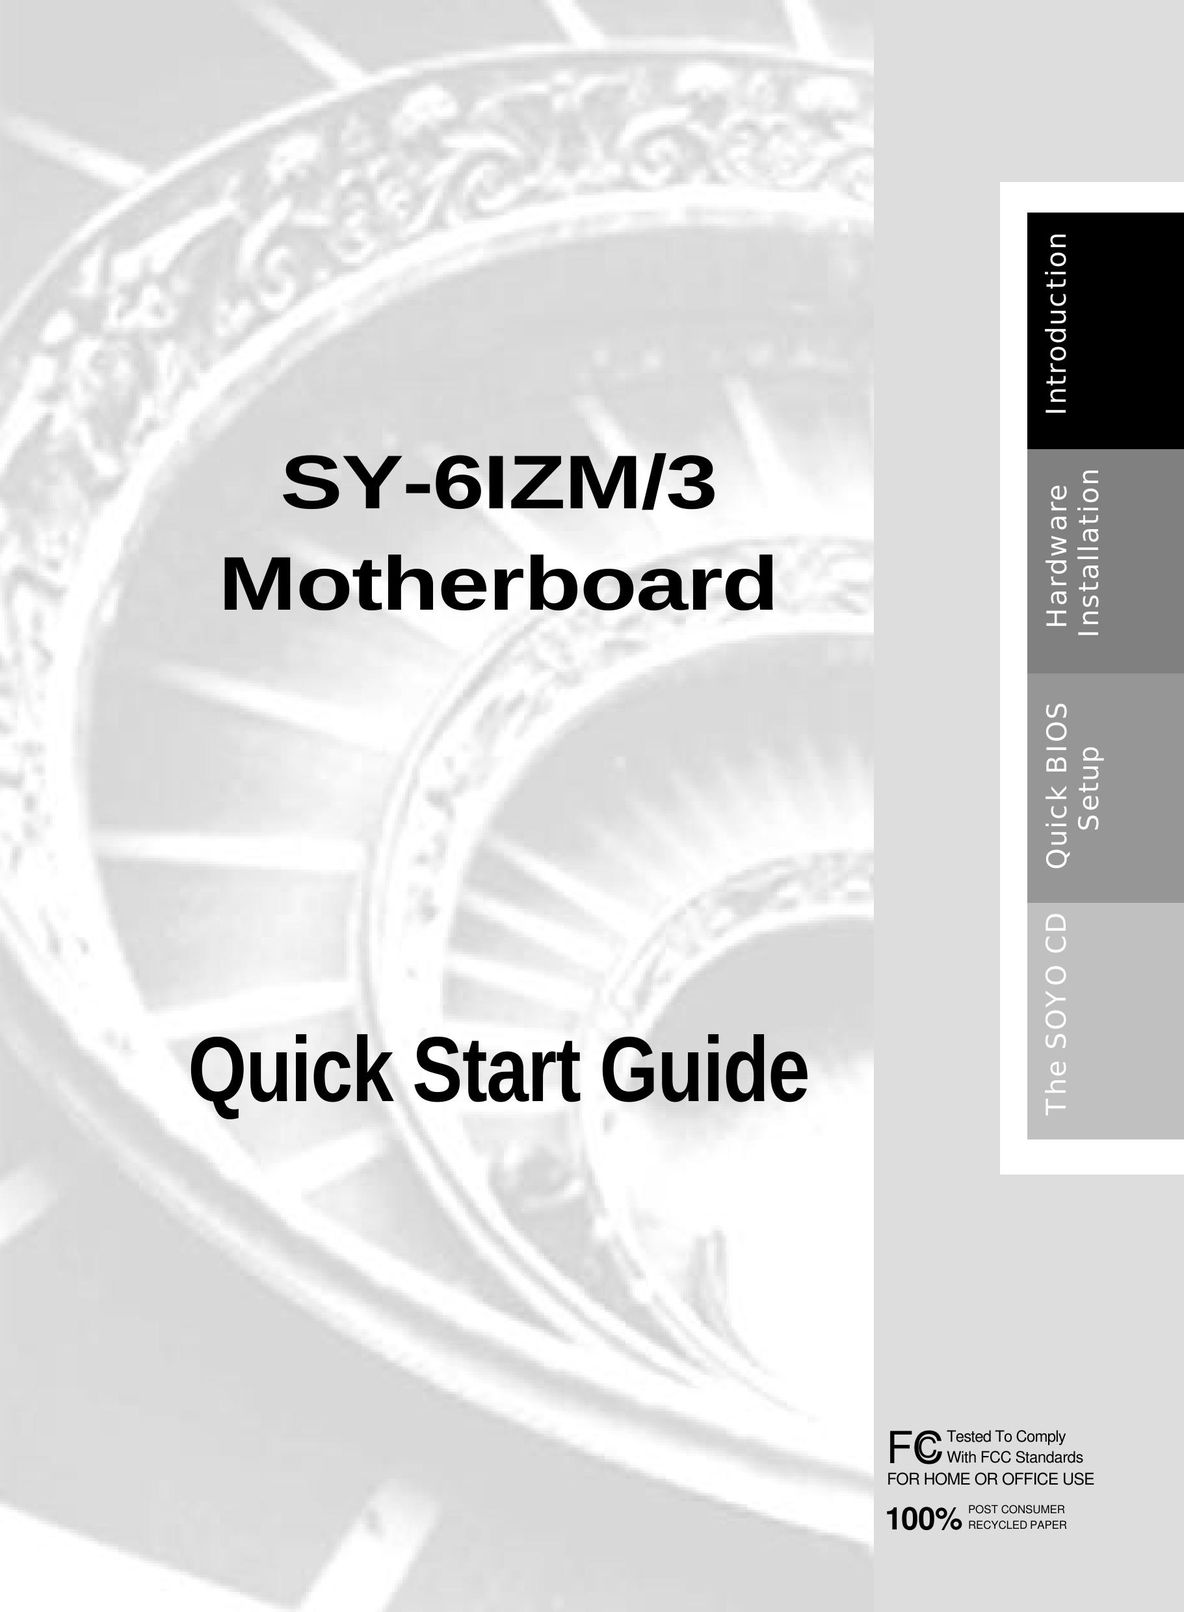 SOYO SY-6IZM/3 Computer Hardware User Manual